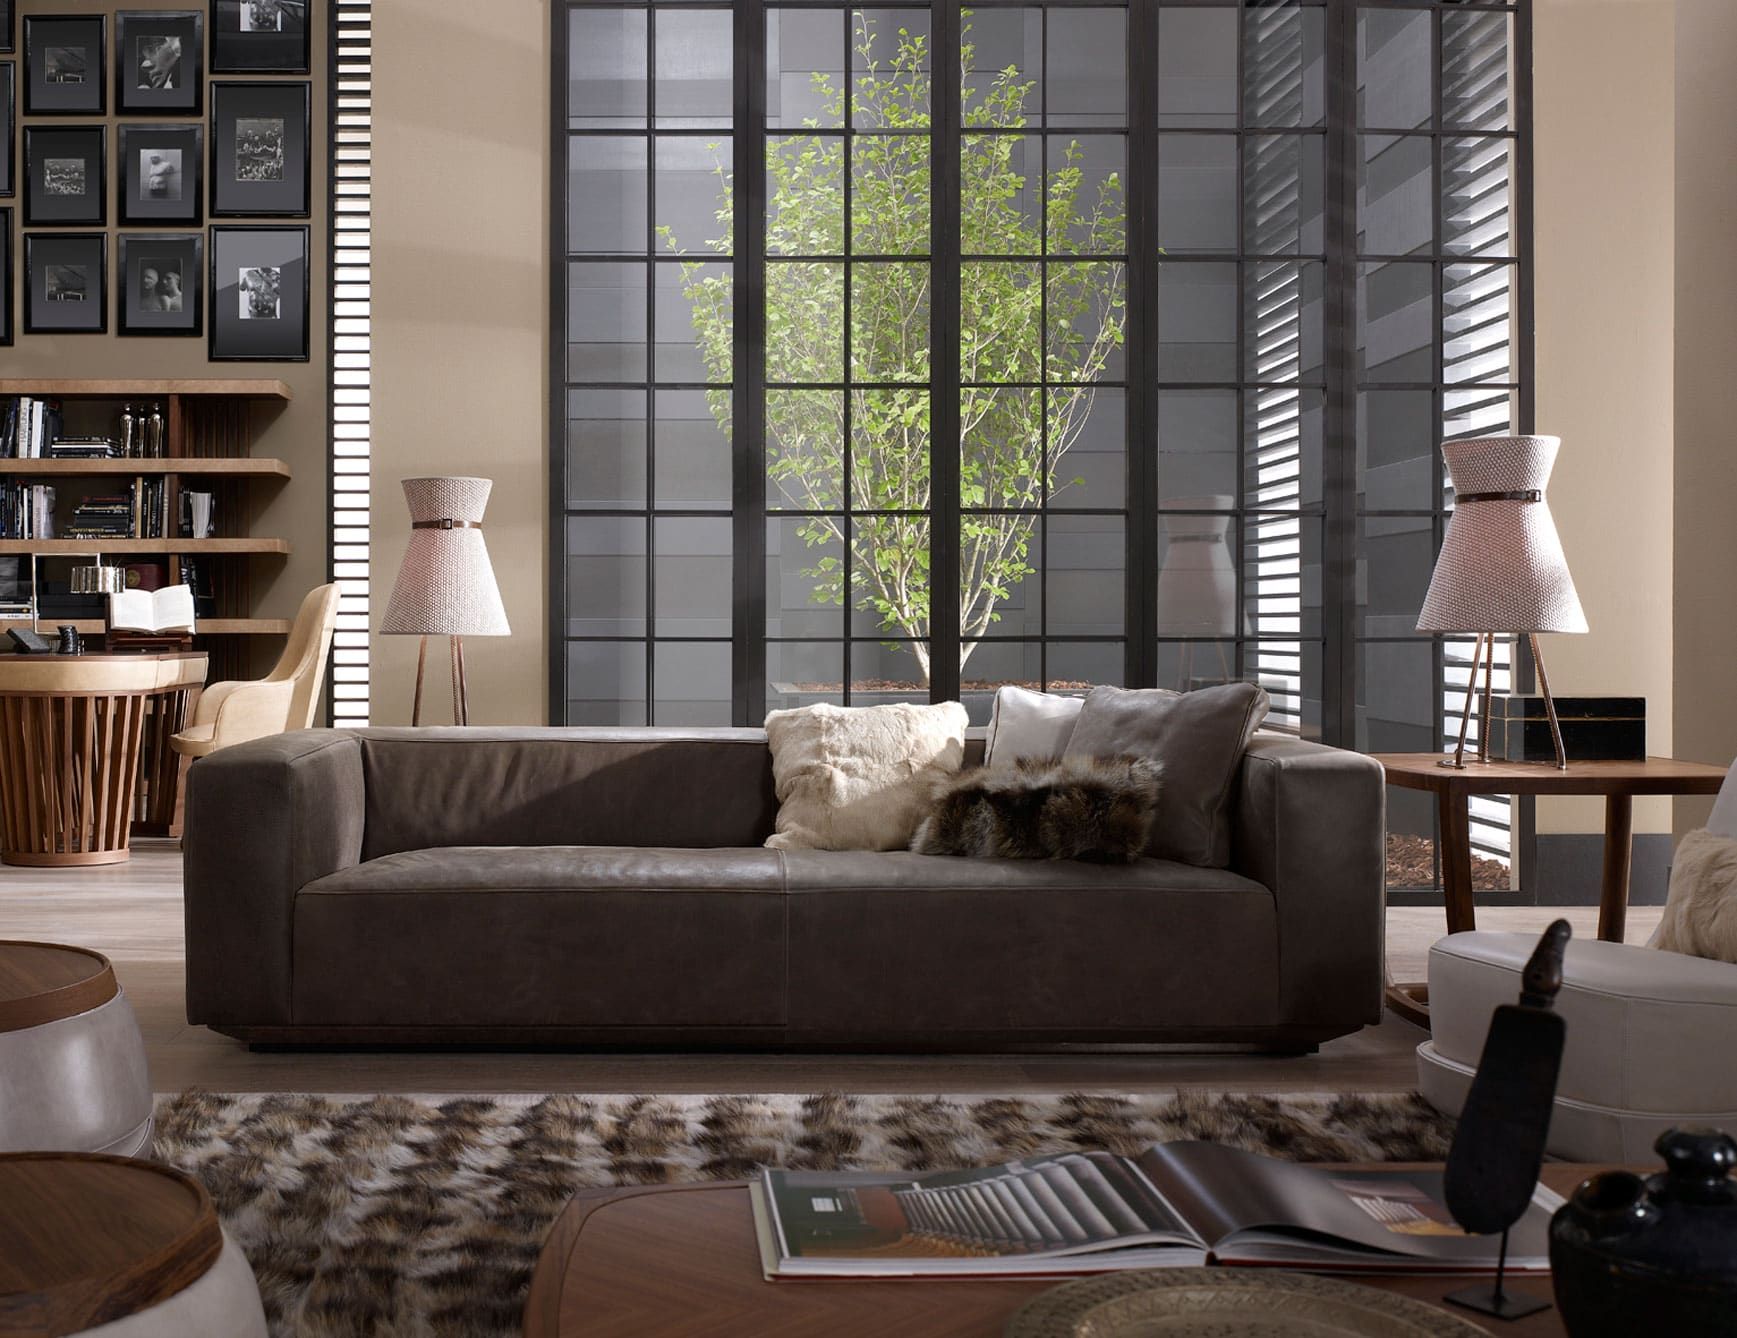 Boss modern Italian sofa chair with grey leather